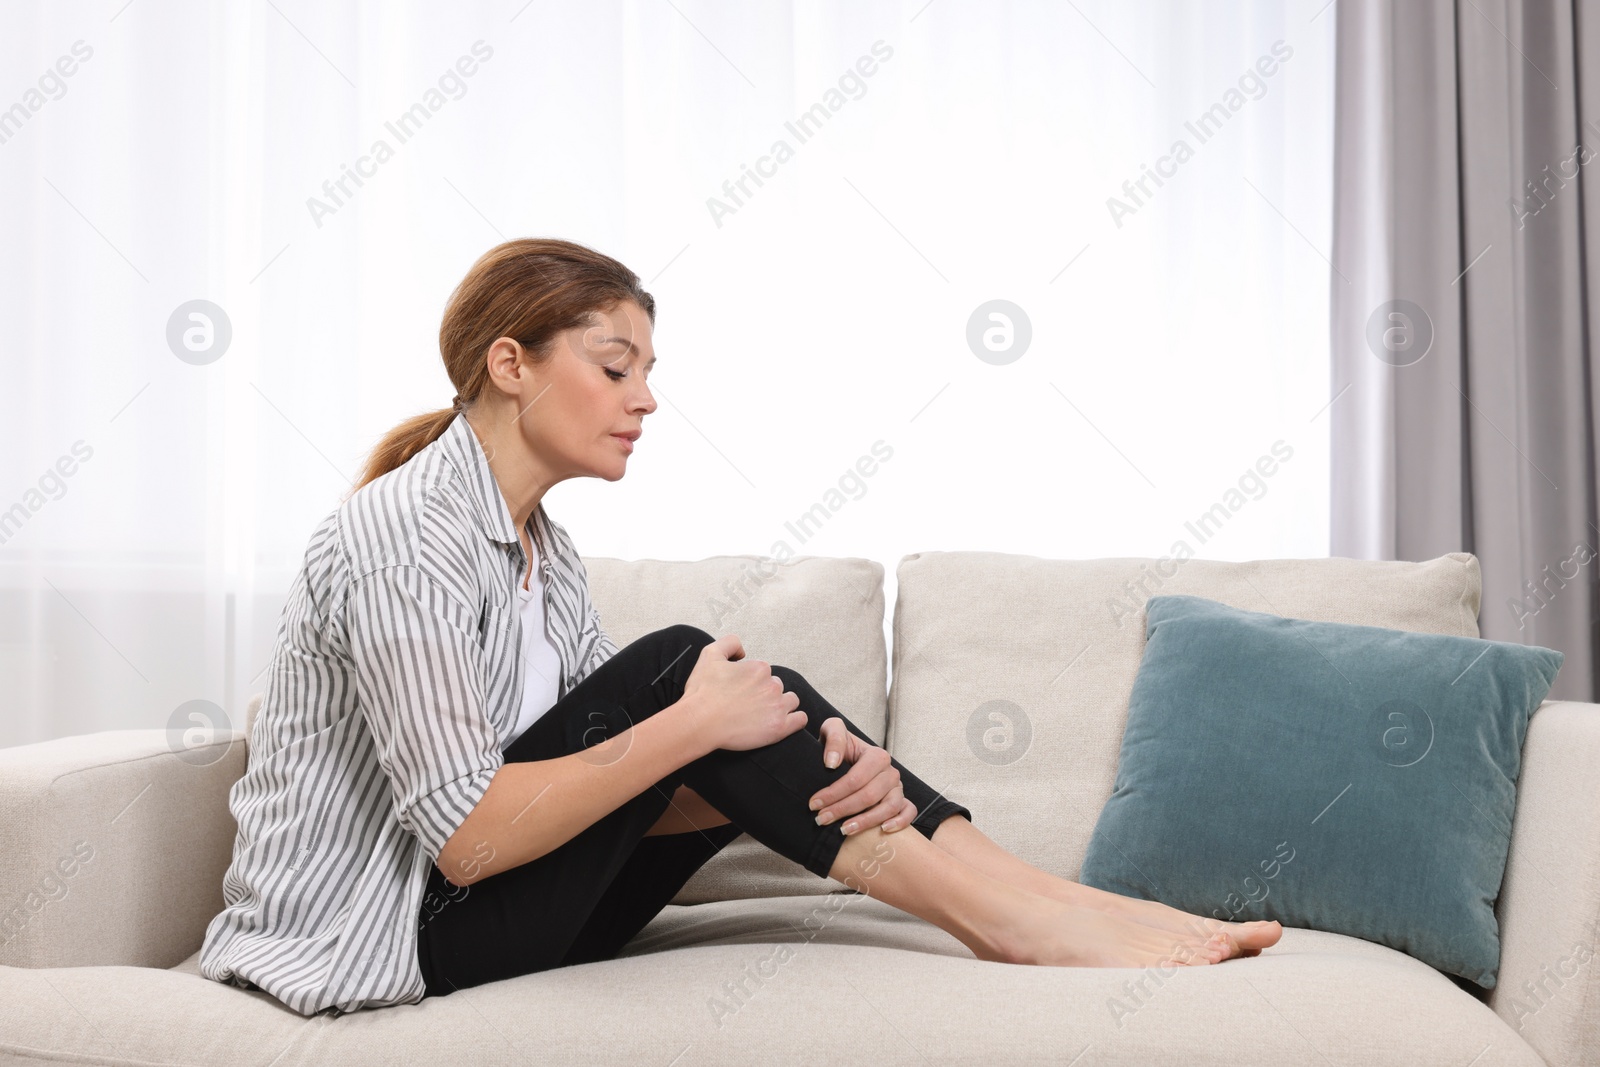 Photo of Woman suffering from leg pain on sofa indoors. Arthritis symptoms